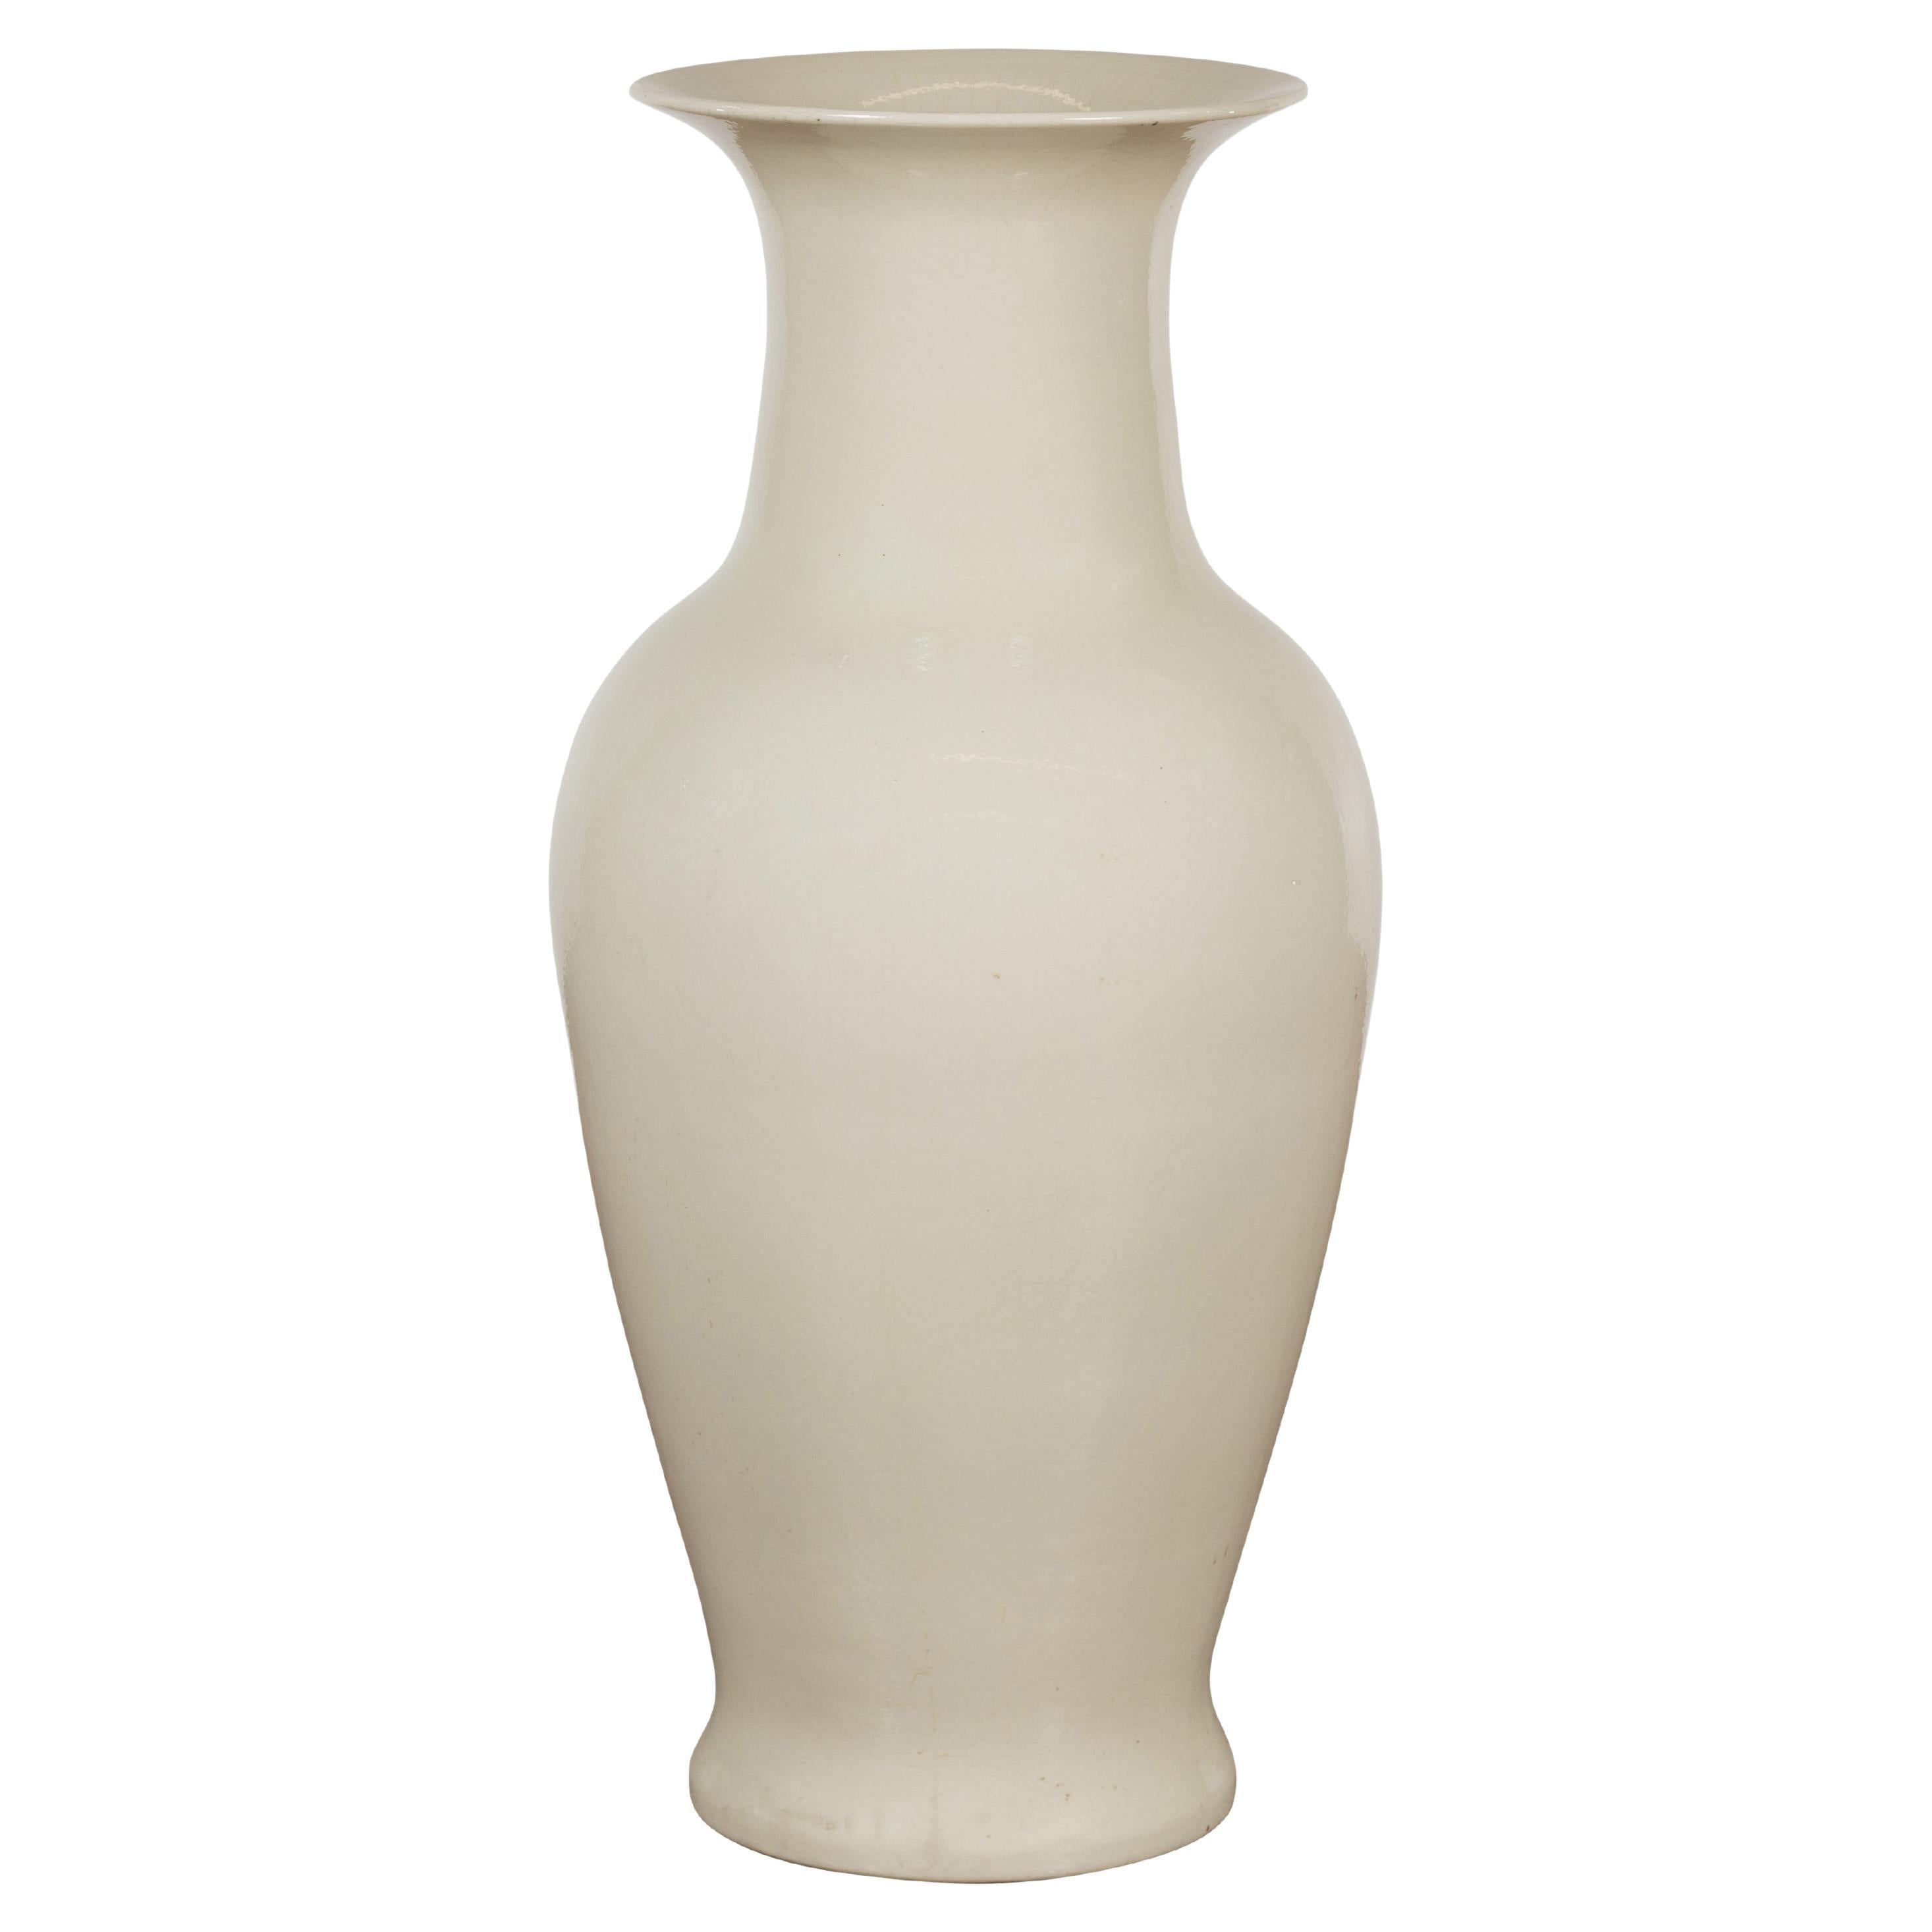 Oversized Chinese Vintage Altar Vase with Blanc de Chine Finish and Flaring Neck